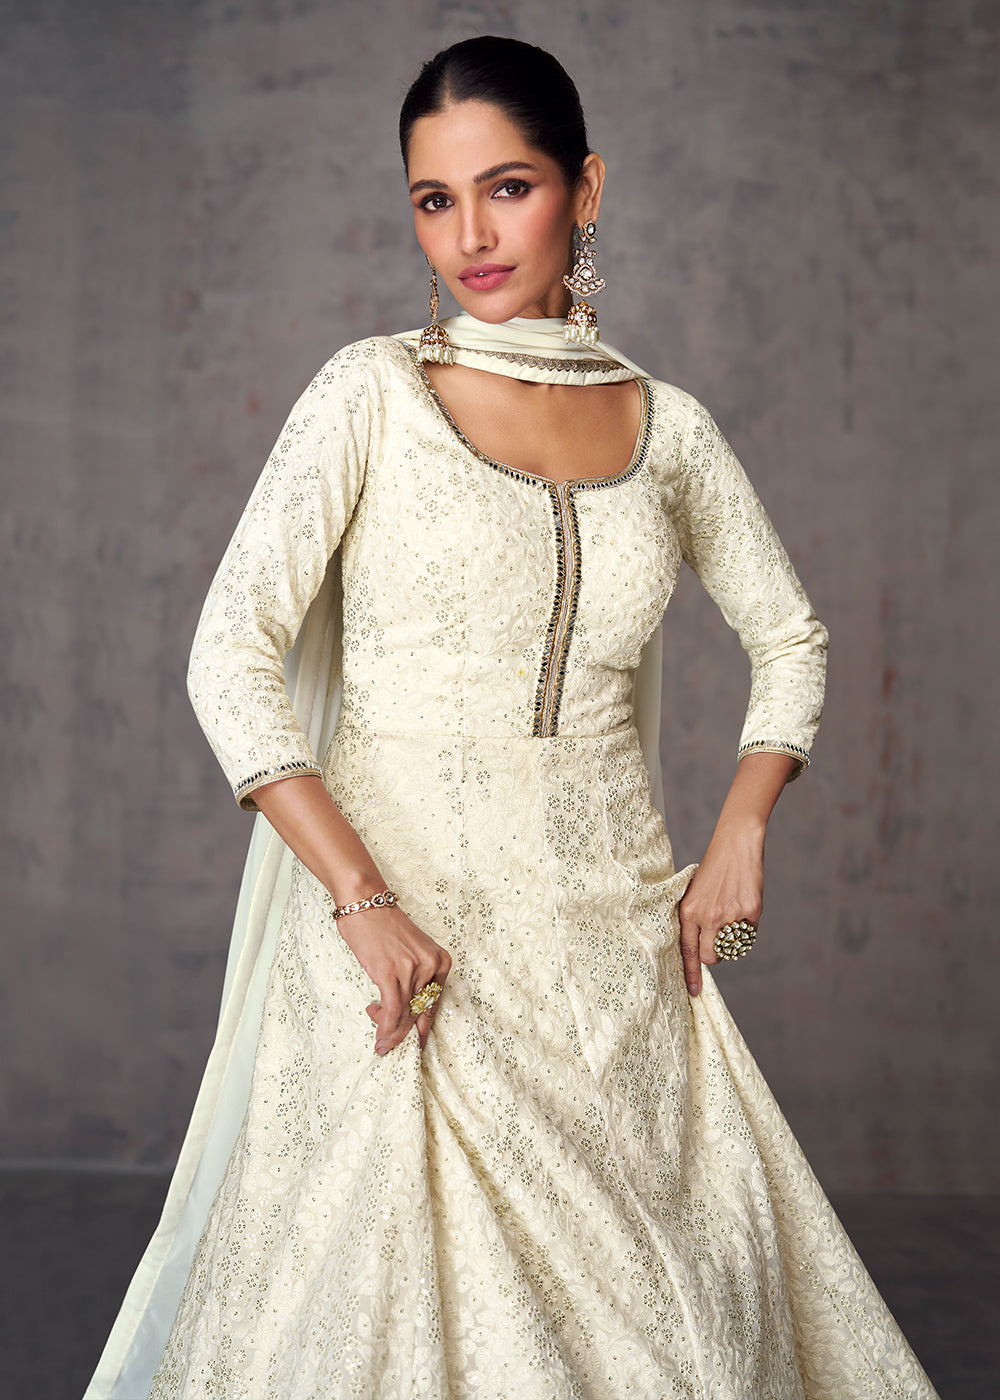 Buy Muslim Ballgown Wedding Dress Online in India - Etsy